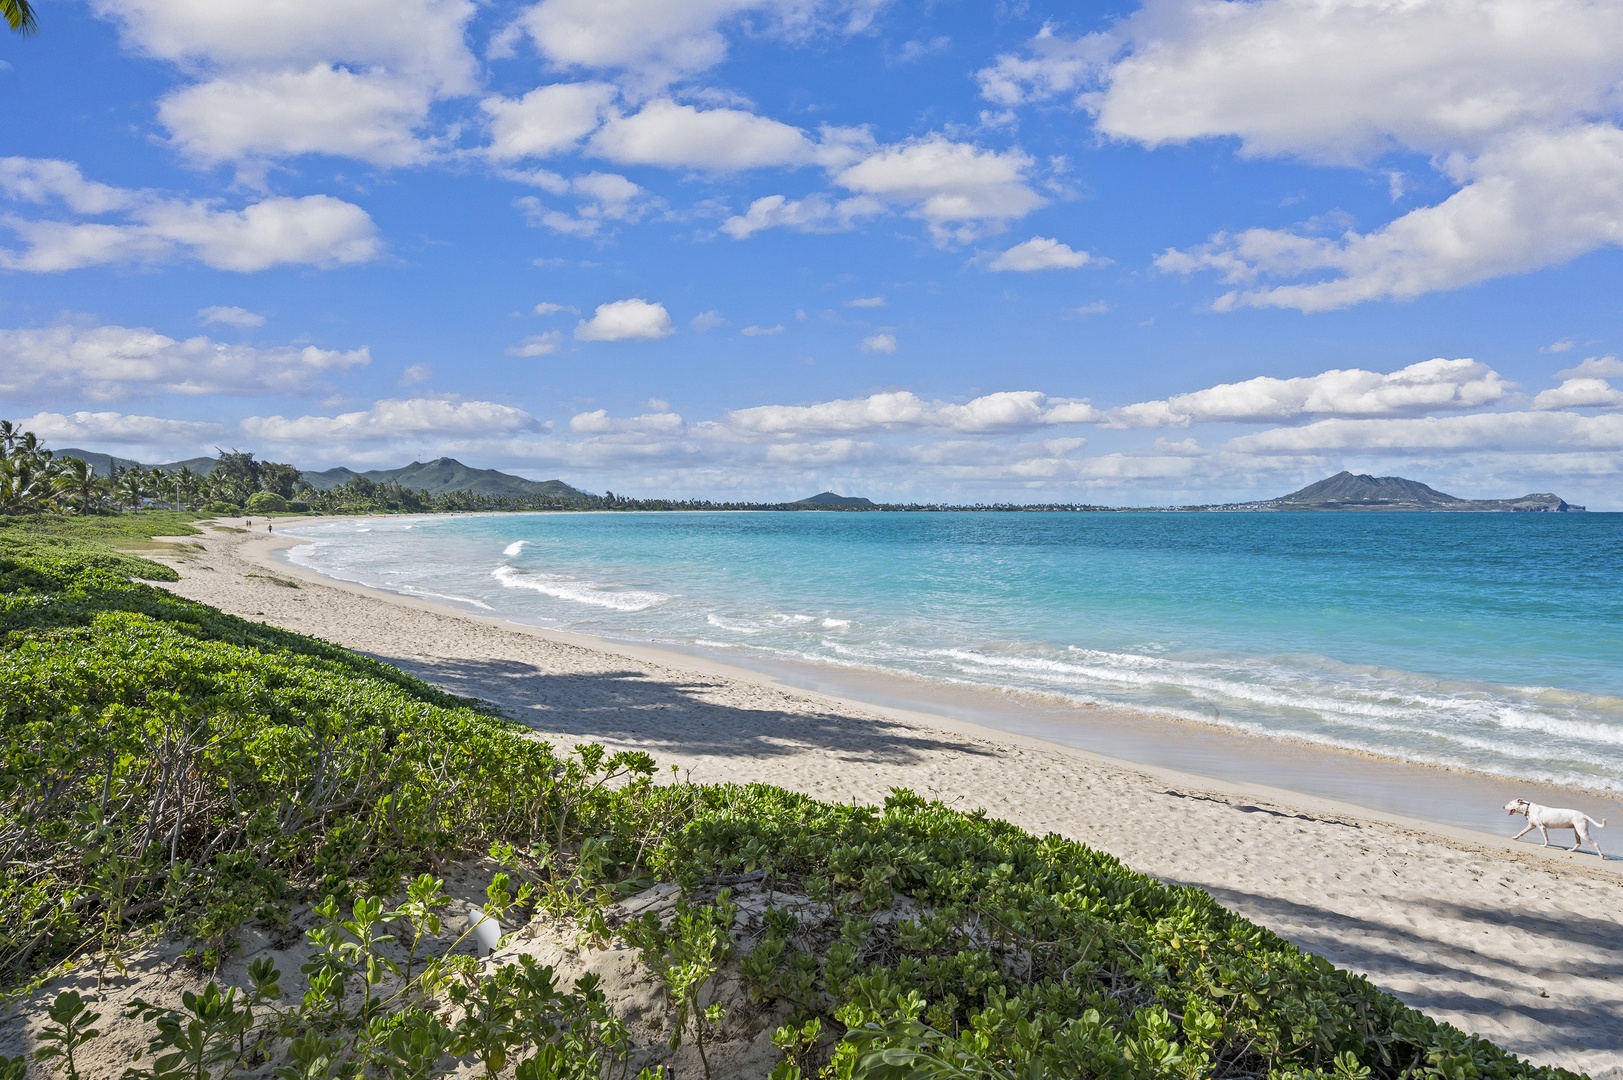 Kailua Vacation Rentals, Kailua Hale Kahakai - This beautiful beach is just steps away from the home